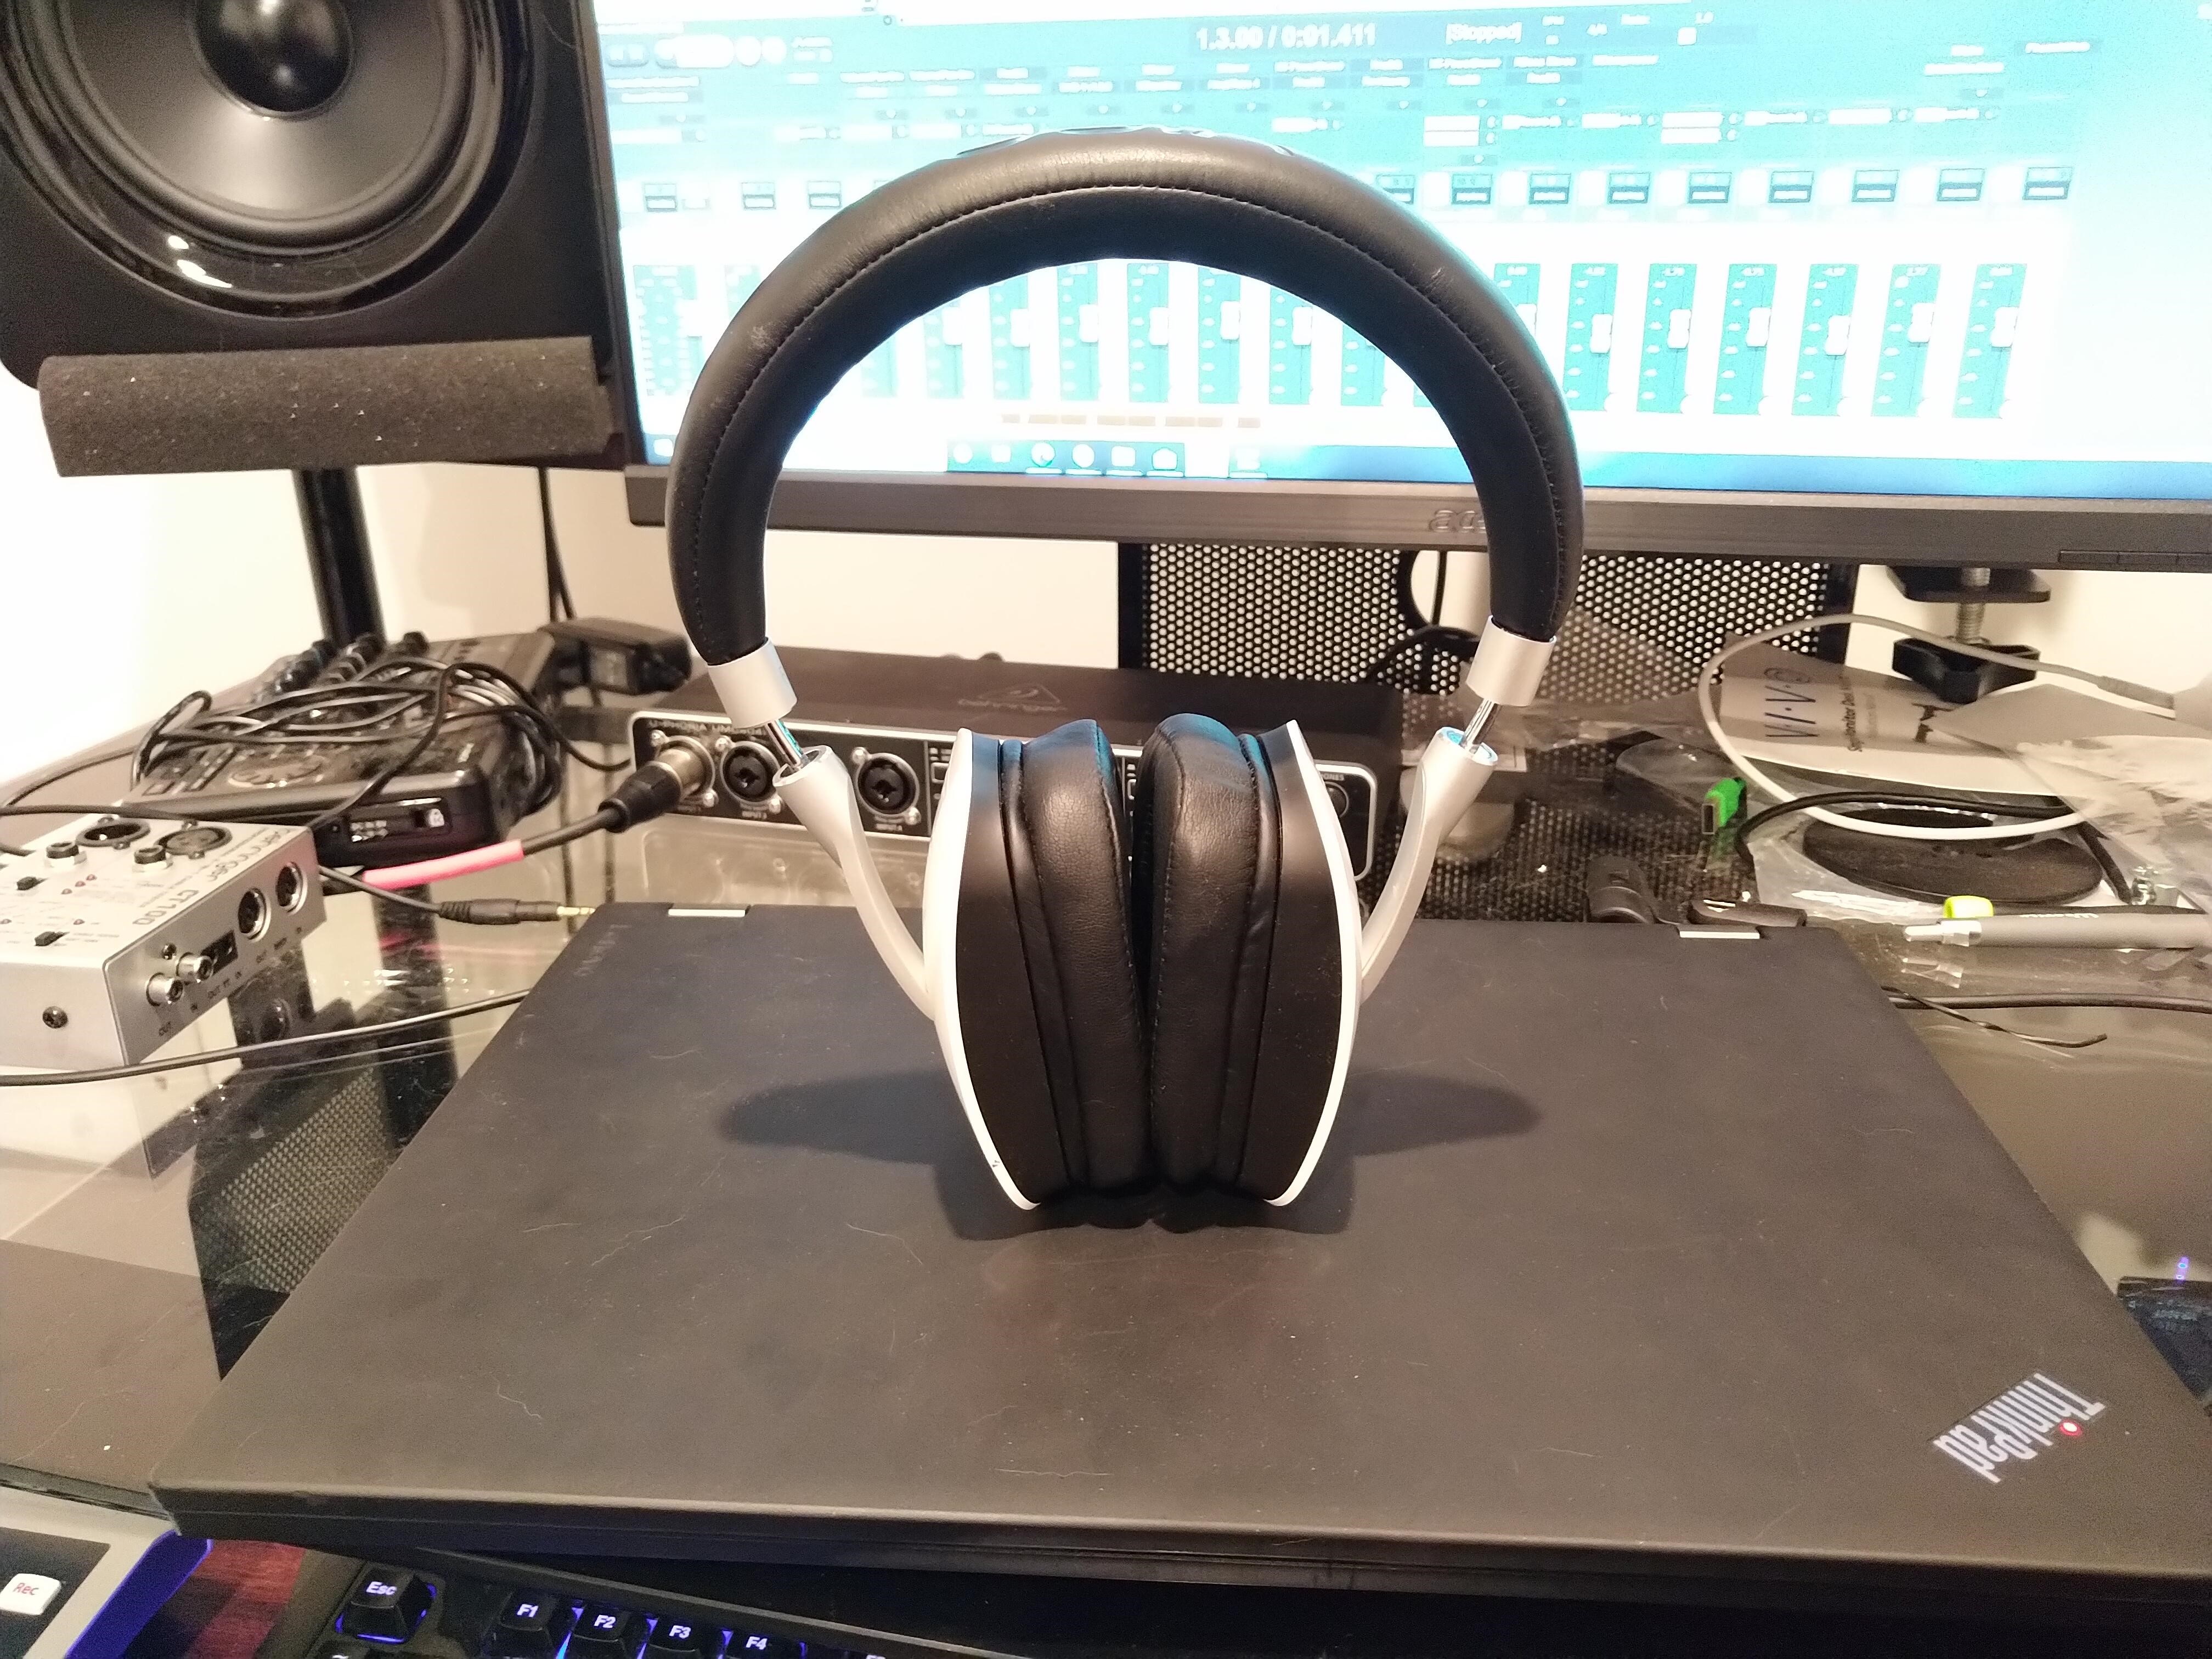 headphone stand.jpg